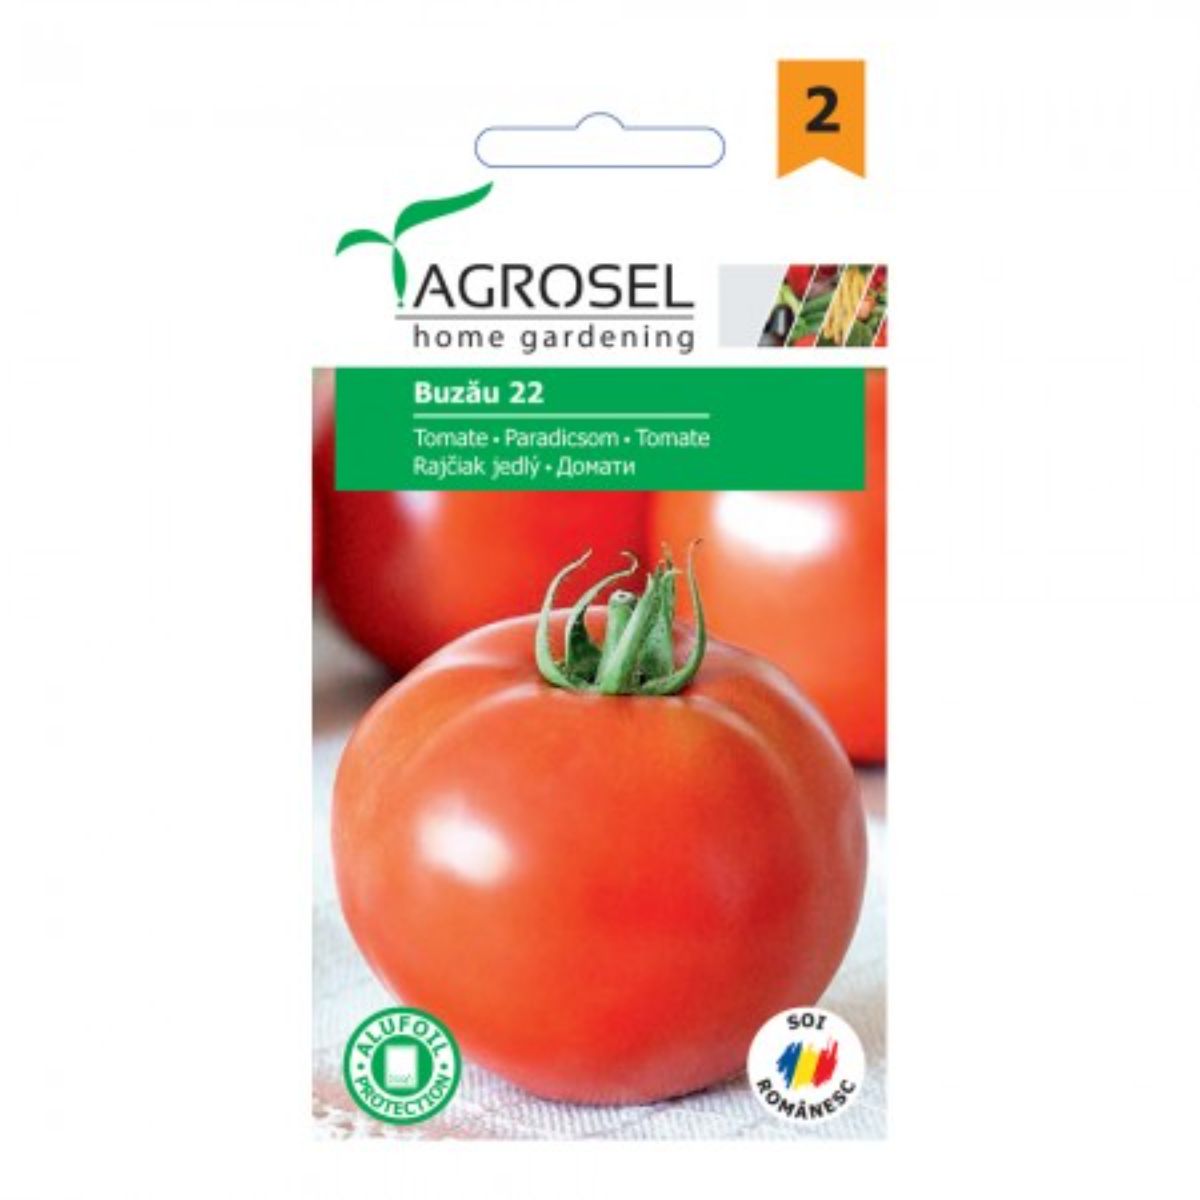 Tomate - Seminte Tomate Buzau 22 Agrosel 0.75 g, hectarul.ro